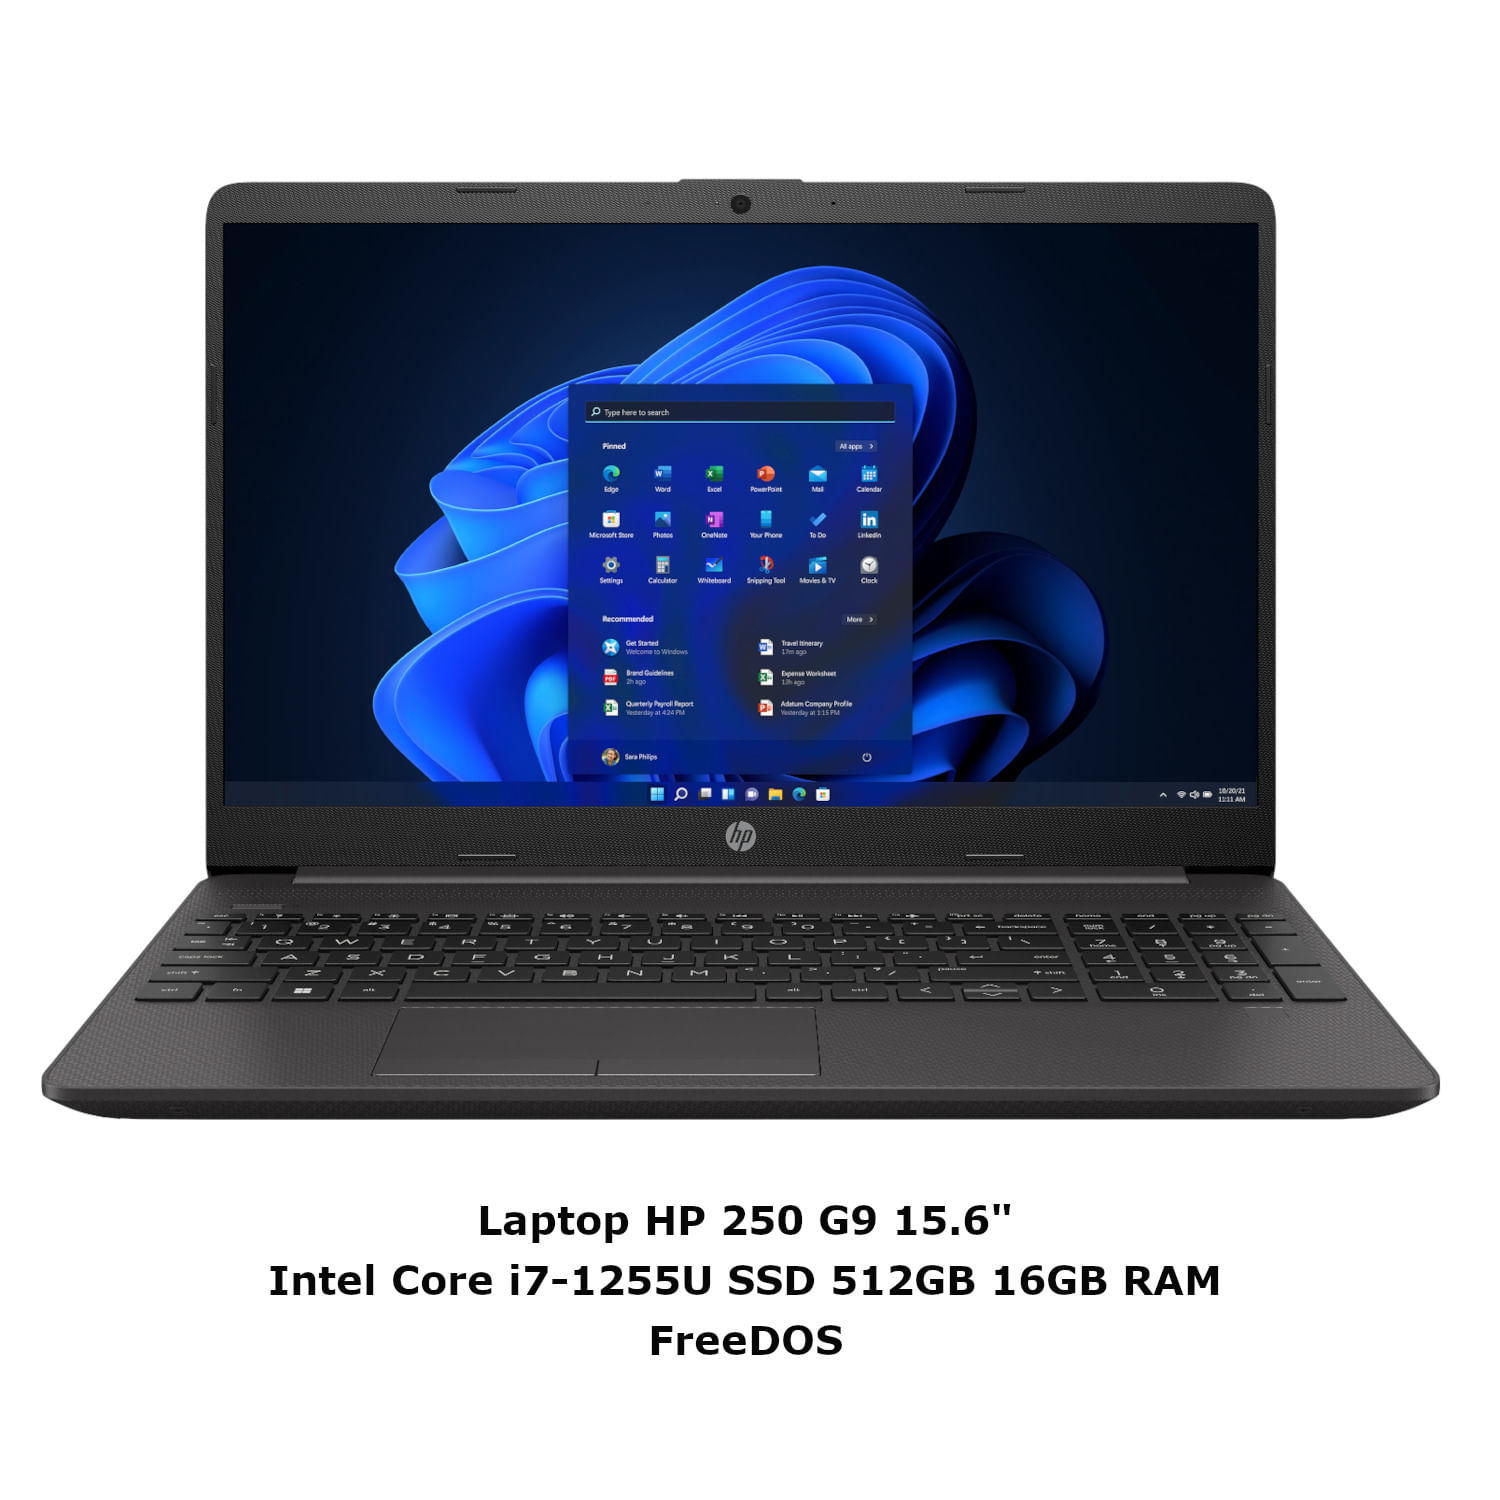 Laptop HP 250 G9 Core i7-1255U 512GB SSD 16GB 15.6" FreeDOS